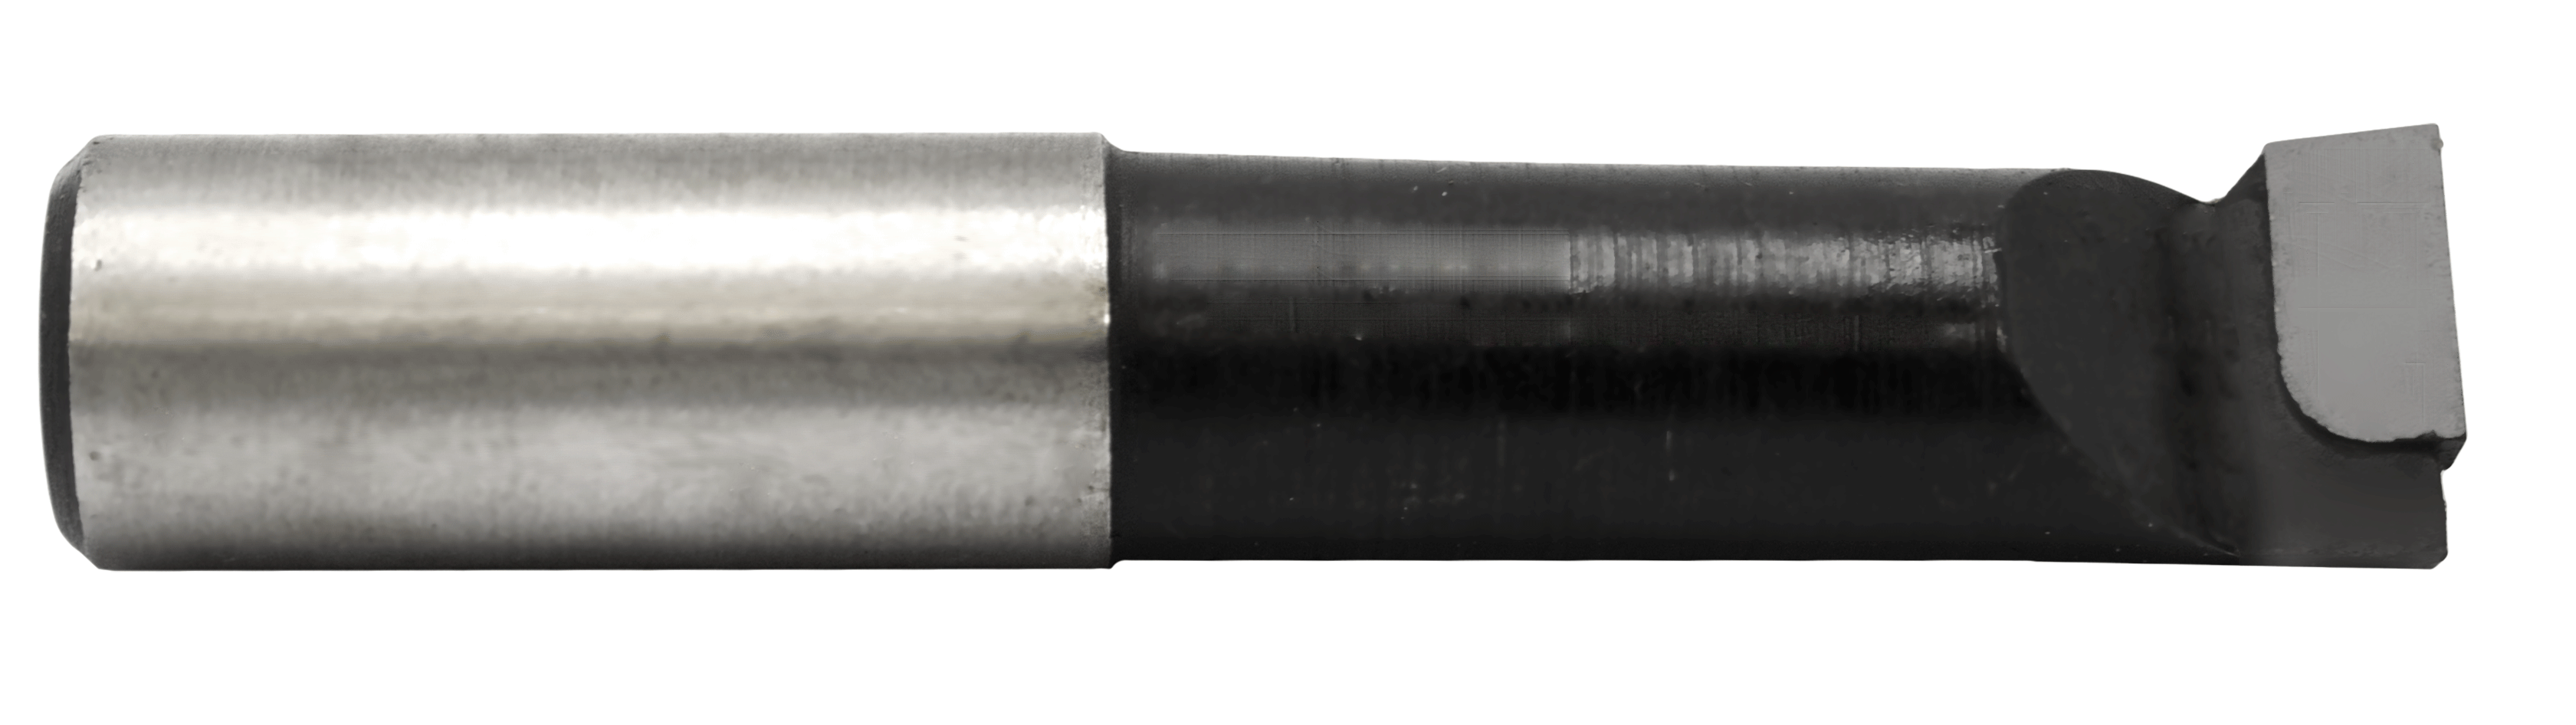 Super-Bore 8mm" C-2 for Cast Iron Applications